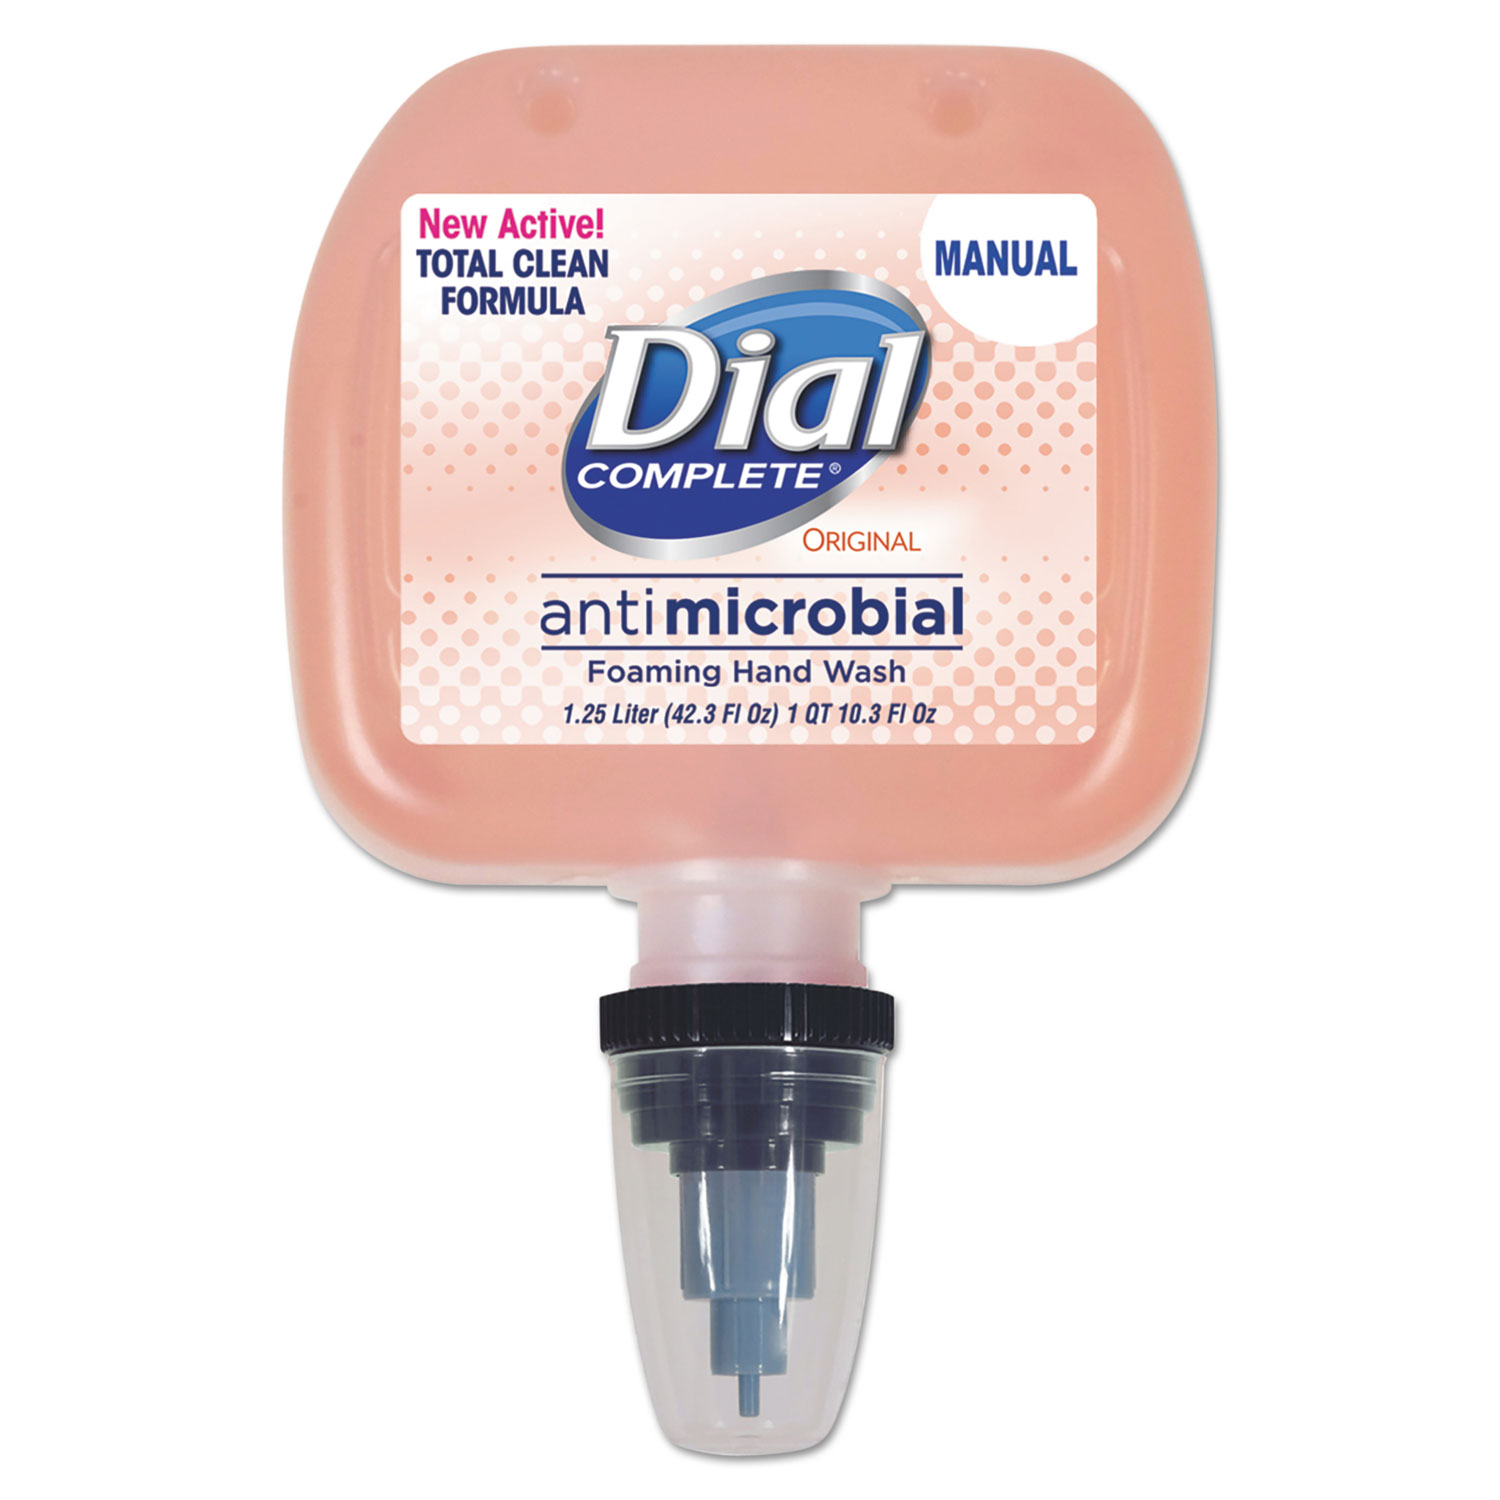  Dial Professional 1700005067 Antimicrobial Foaming Hand Wash, Original, 1.25L, Cassette Refill, 3/Carton (DIA05067) 